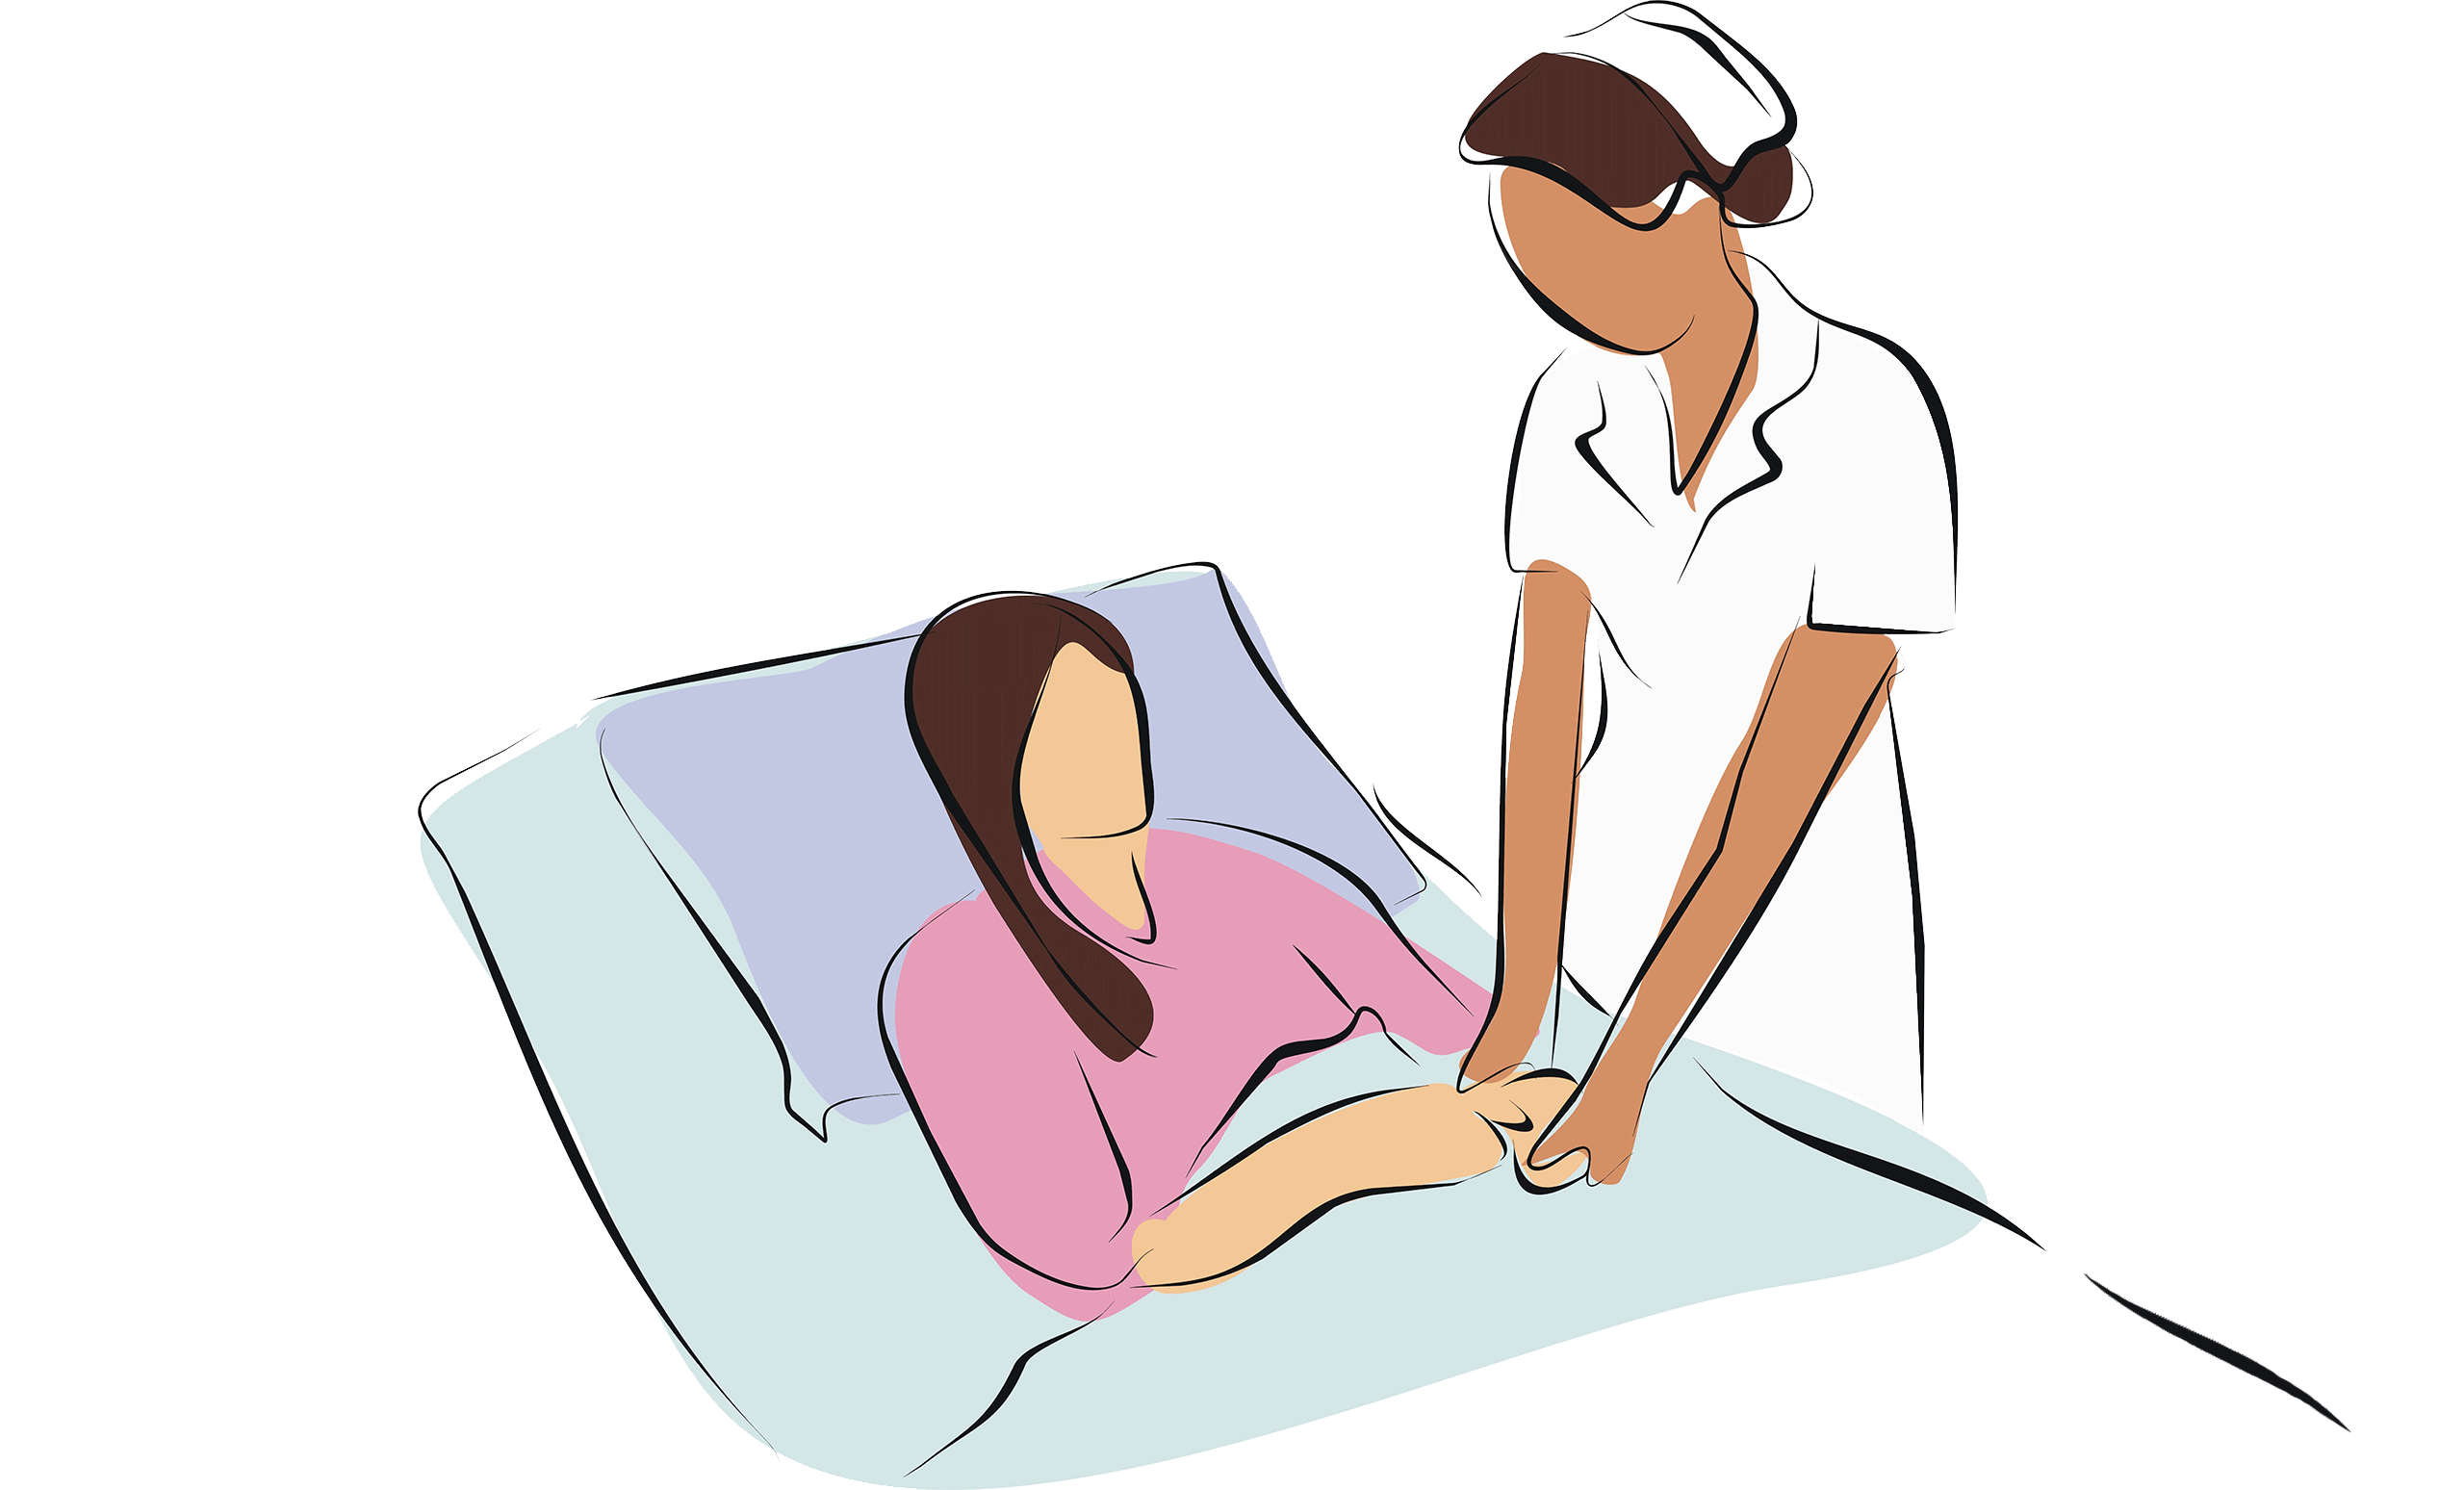 nurse caring for patient